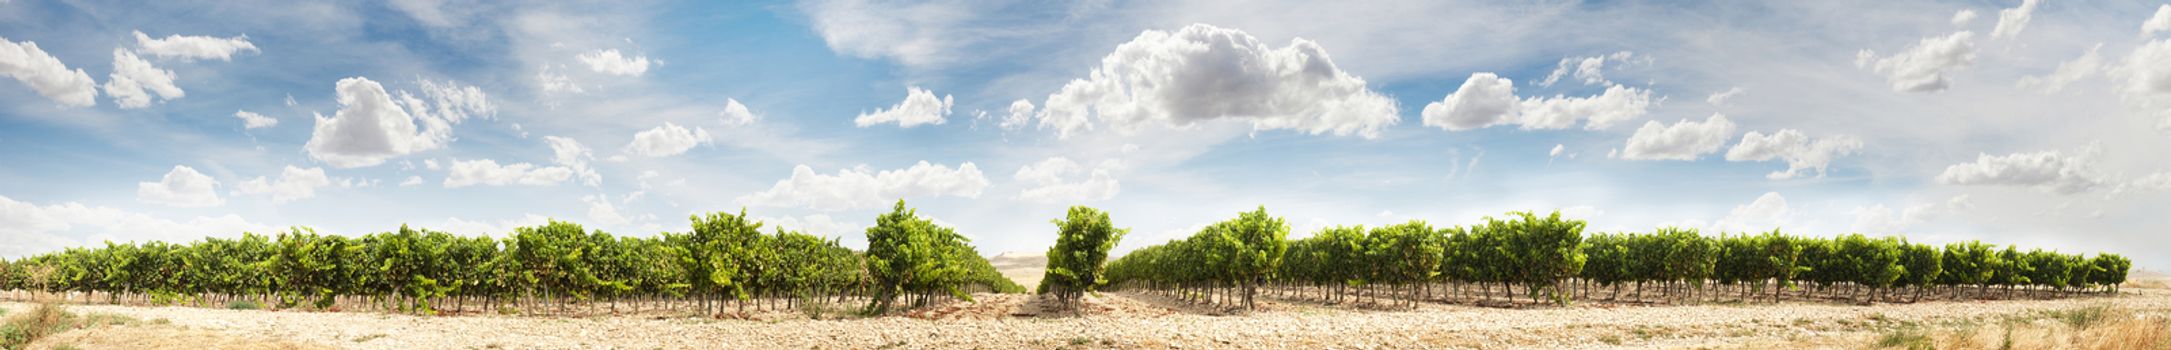 Vineyards panoramic image. Cloudy sunny sky